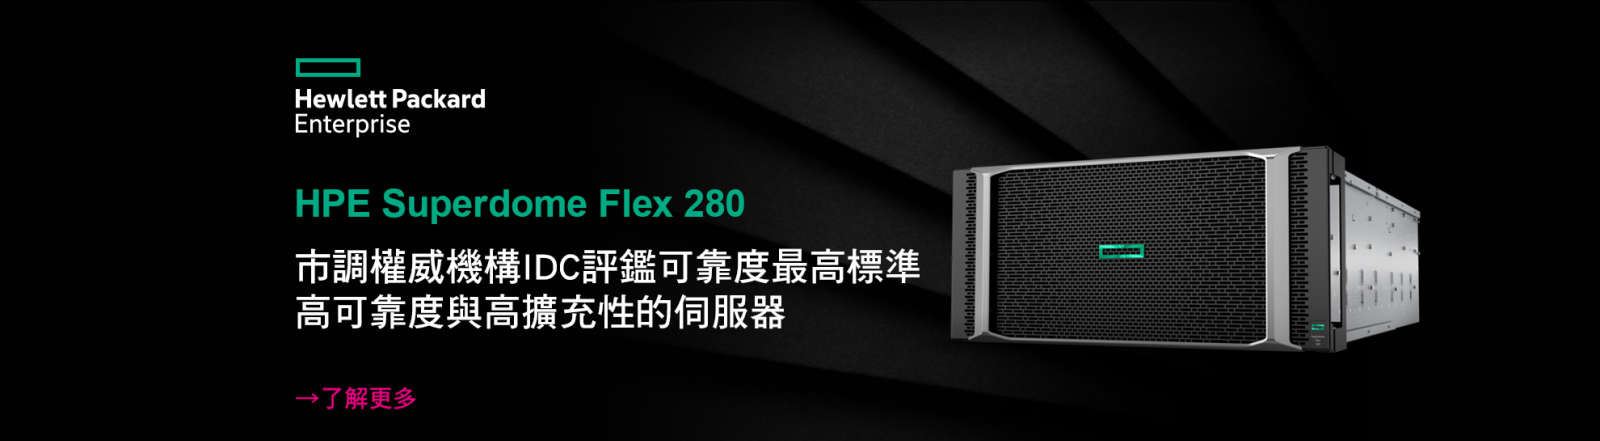 HPE Superdome Flex 280 關鍵應用平台